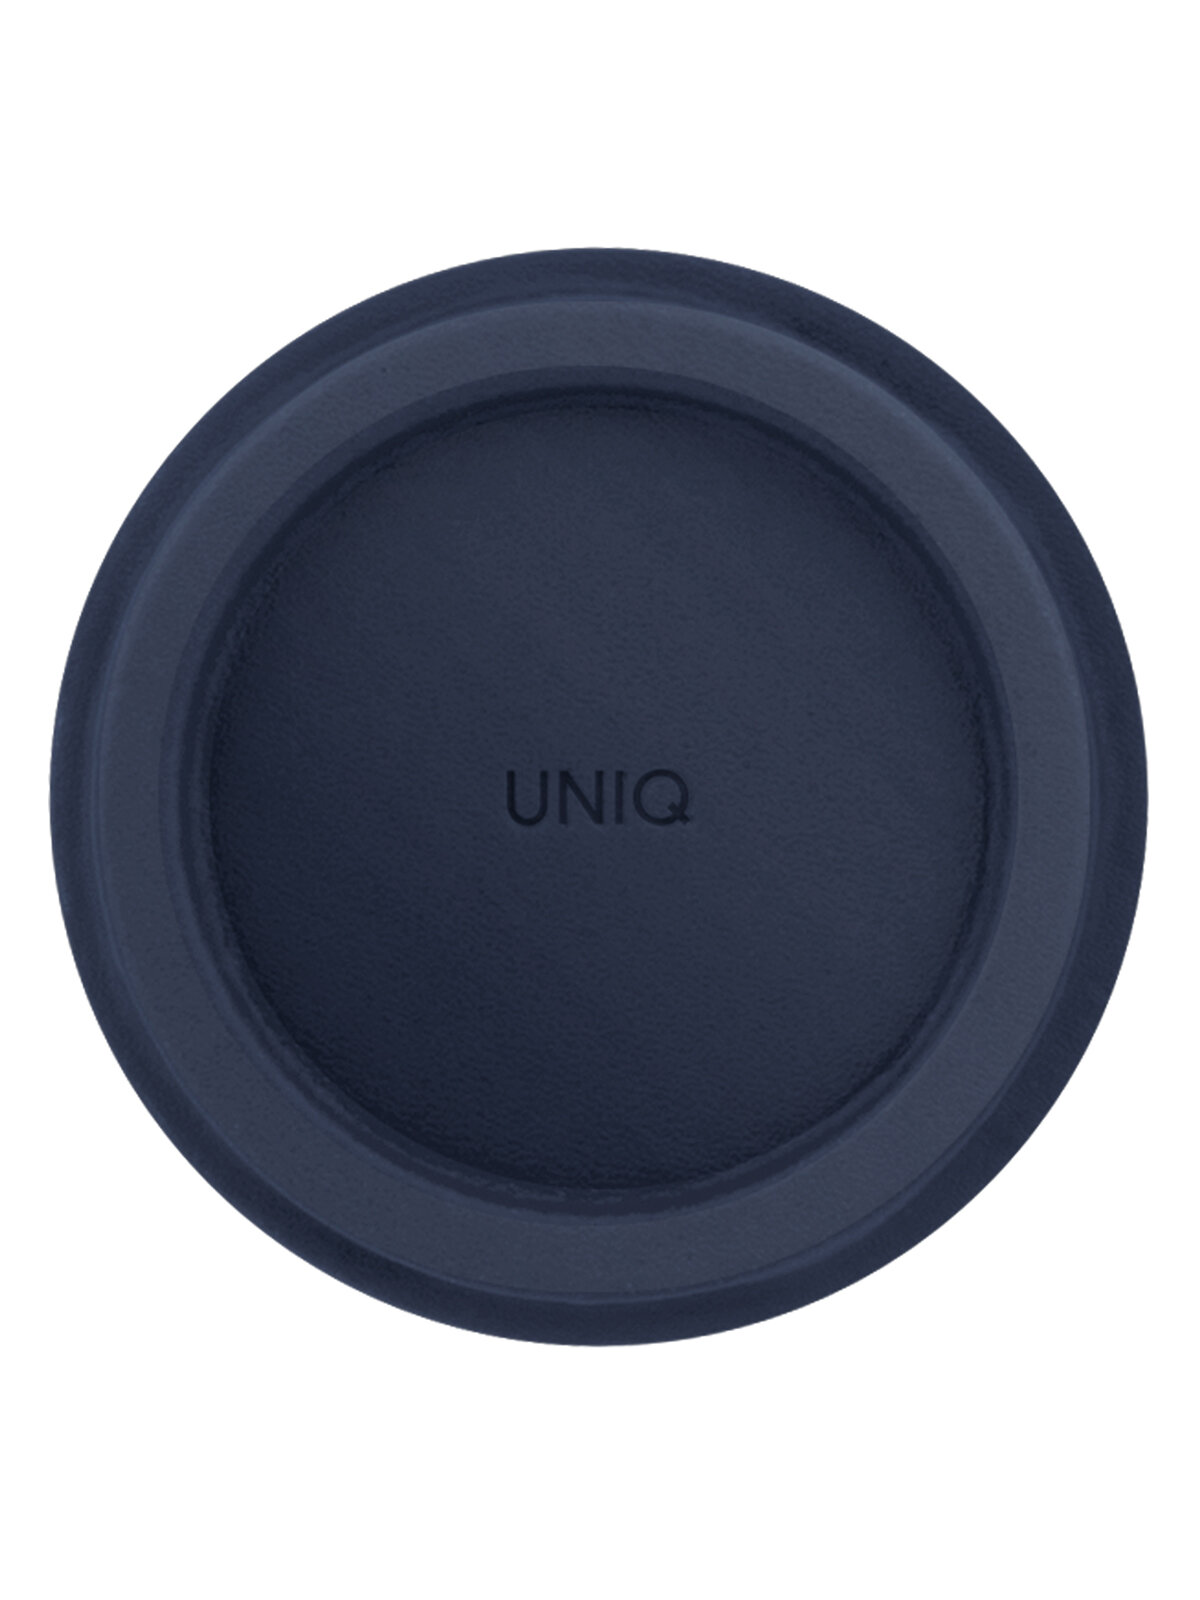 Uniq магнитный держатель FLIXA Magnetic Mount Base Navy Blue